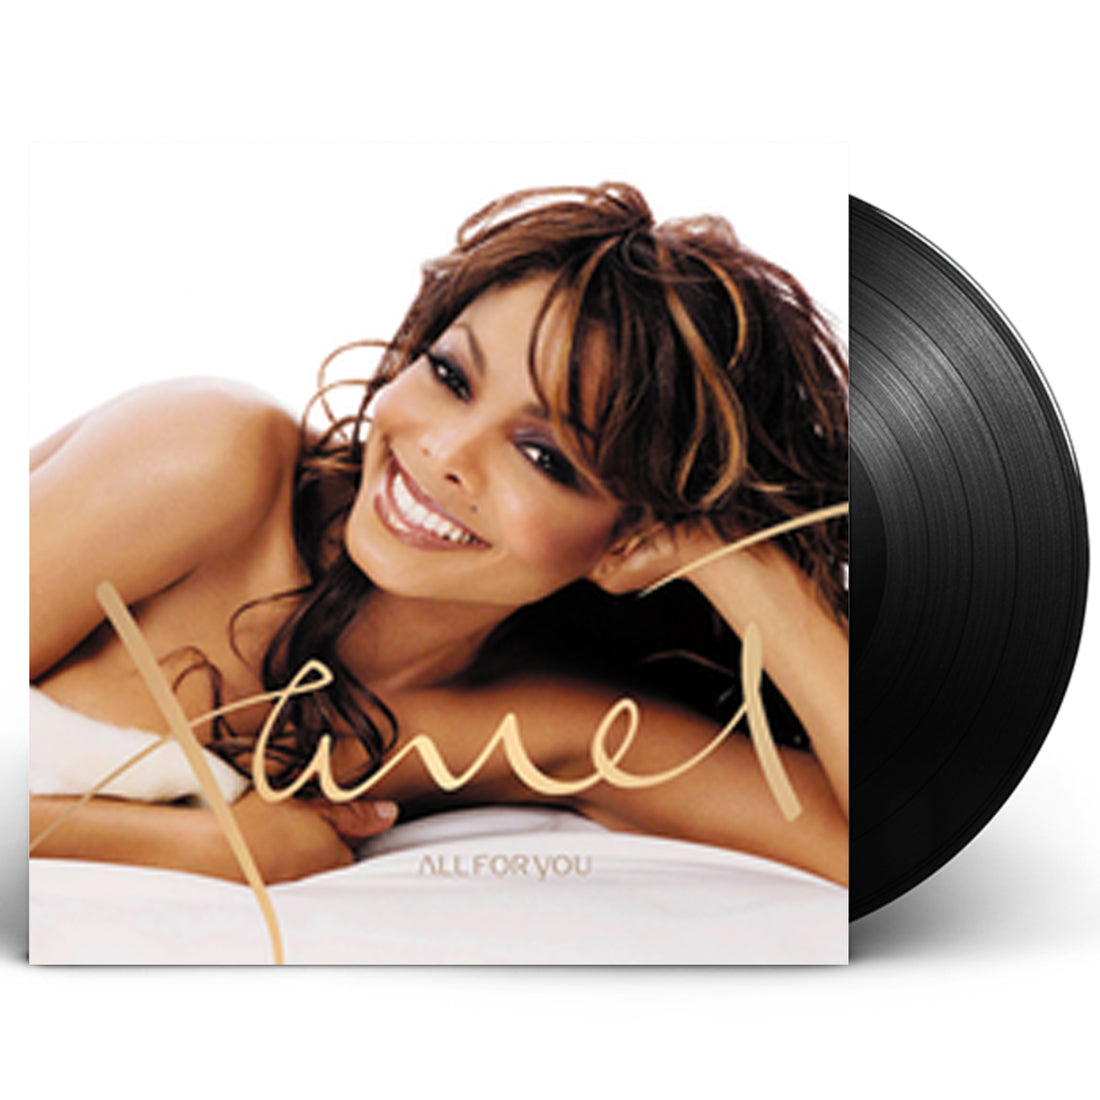 Janet Jackson "All For You" 2xLP Vinyl